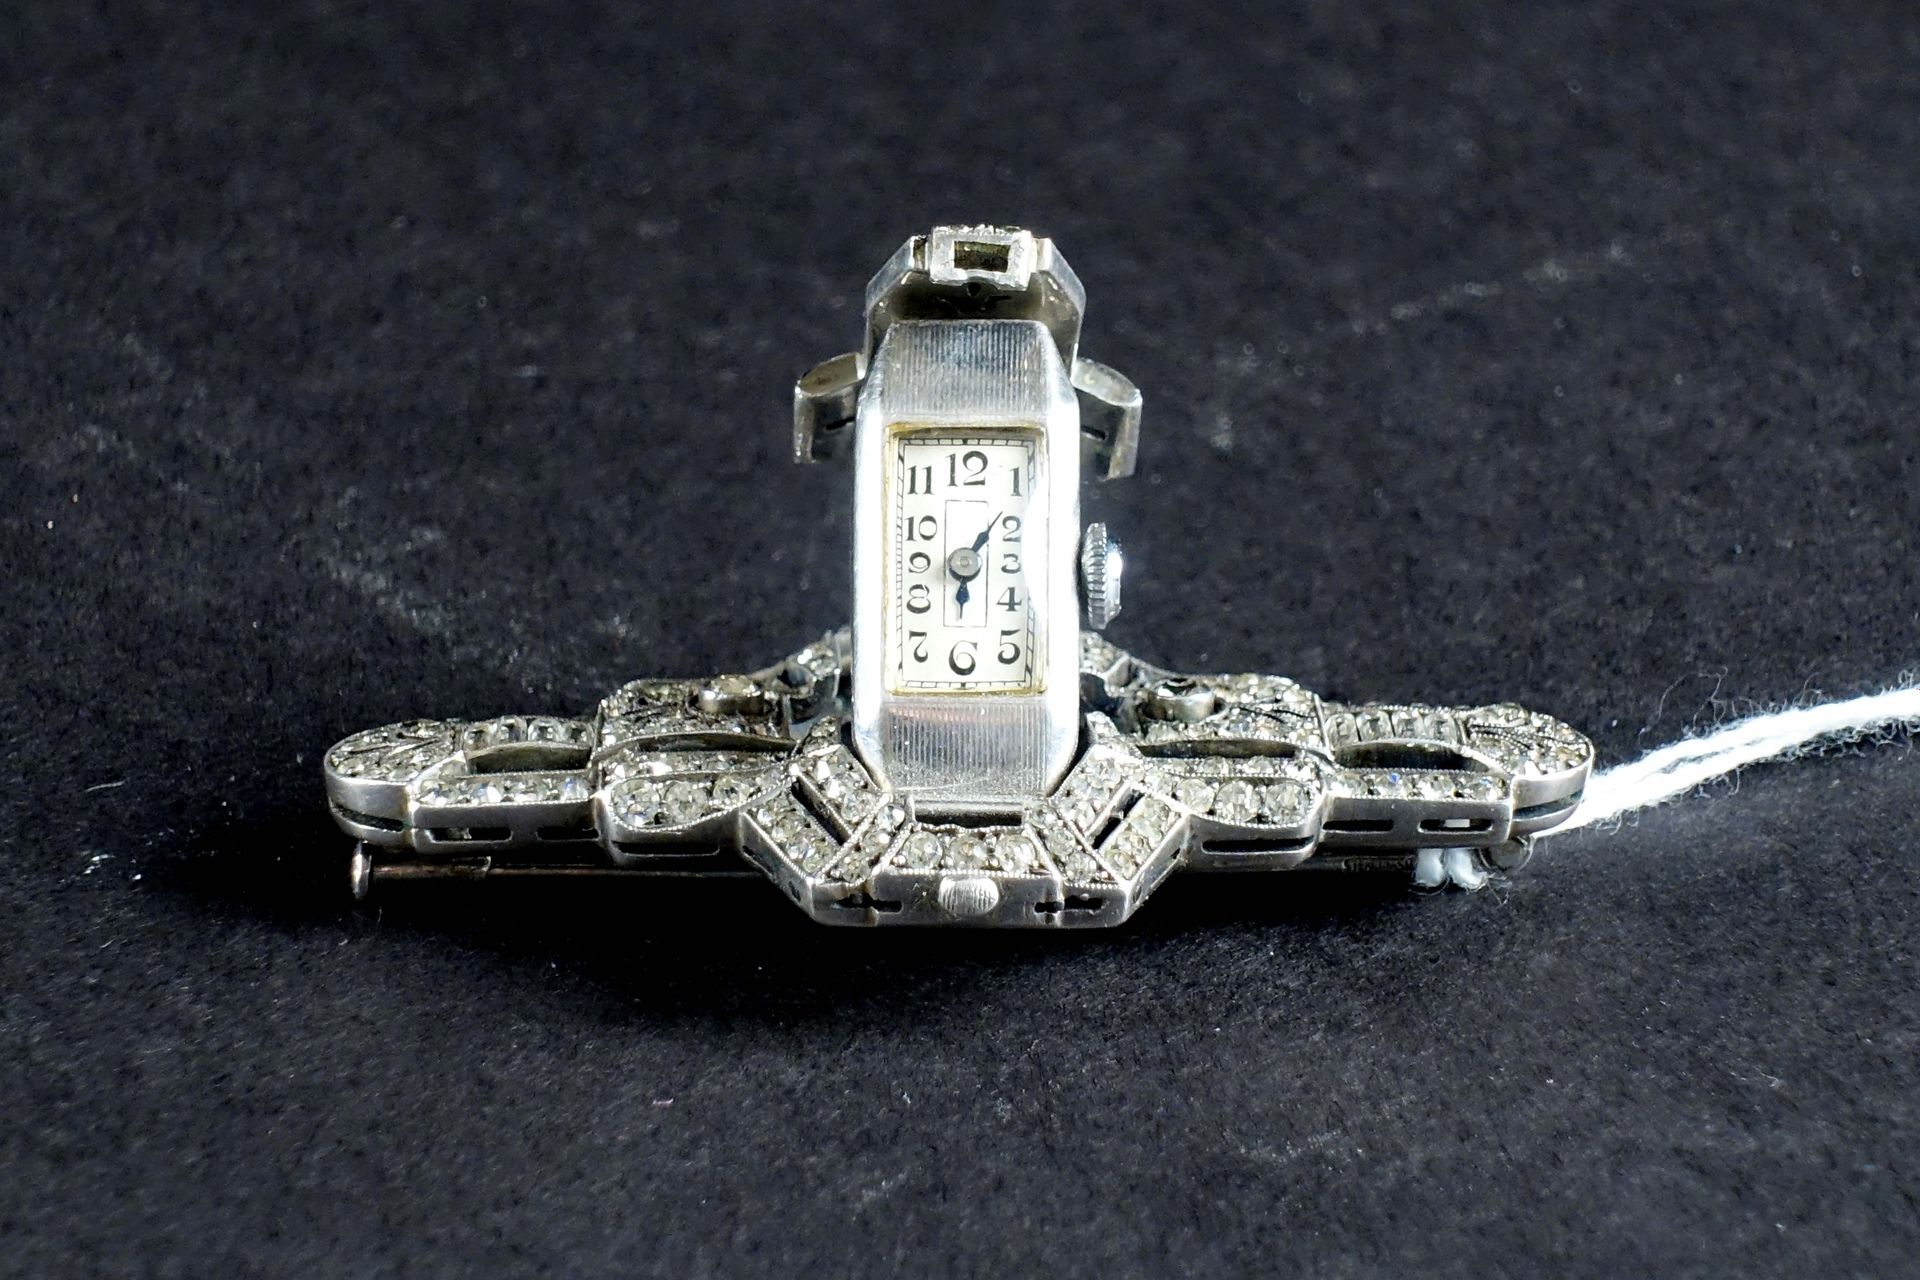 Broche-Montre Art Déco. 银色框架上有水钻，包裹着一只功能性手动机芯手表。